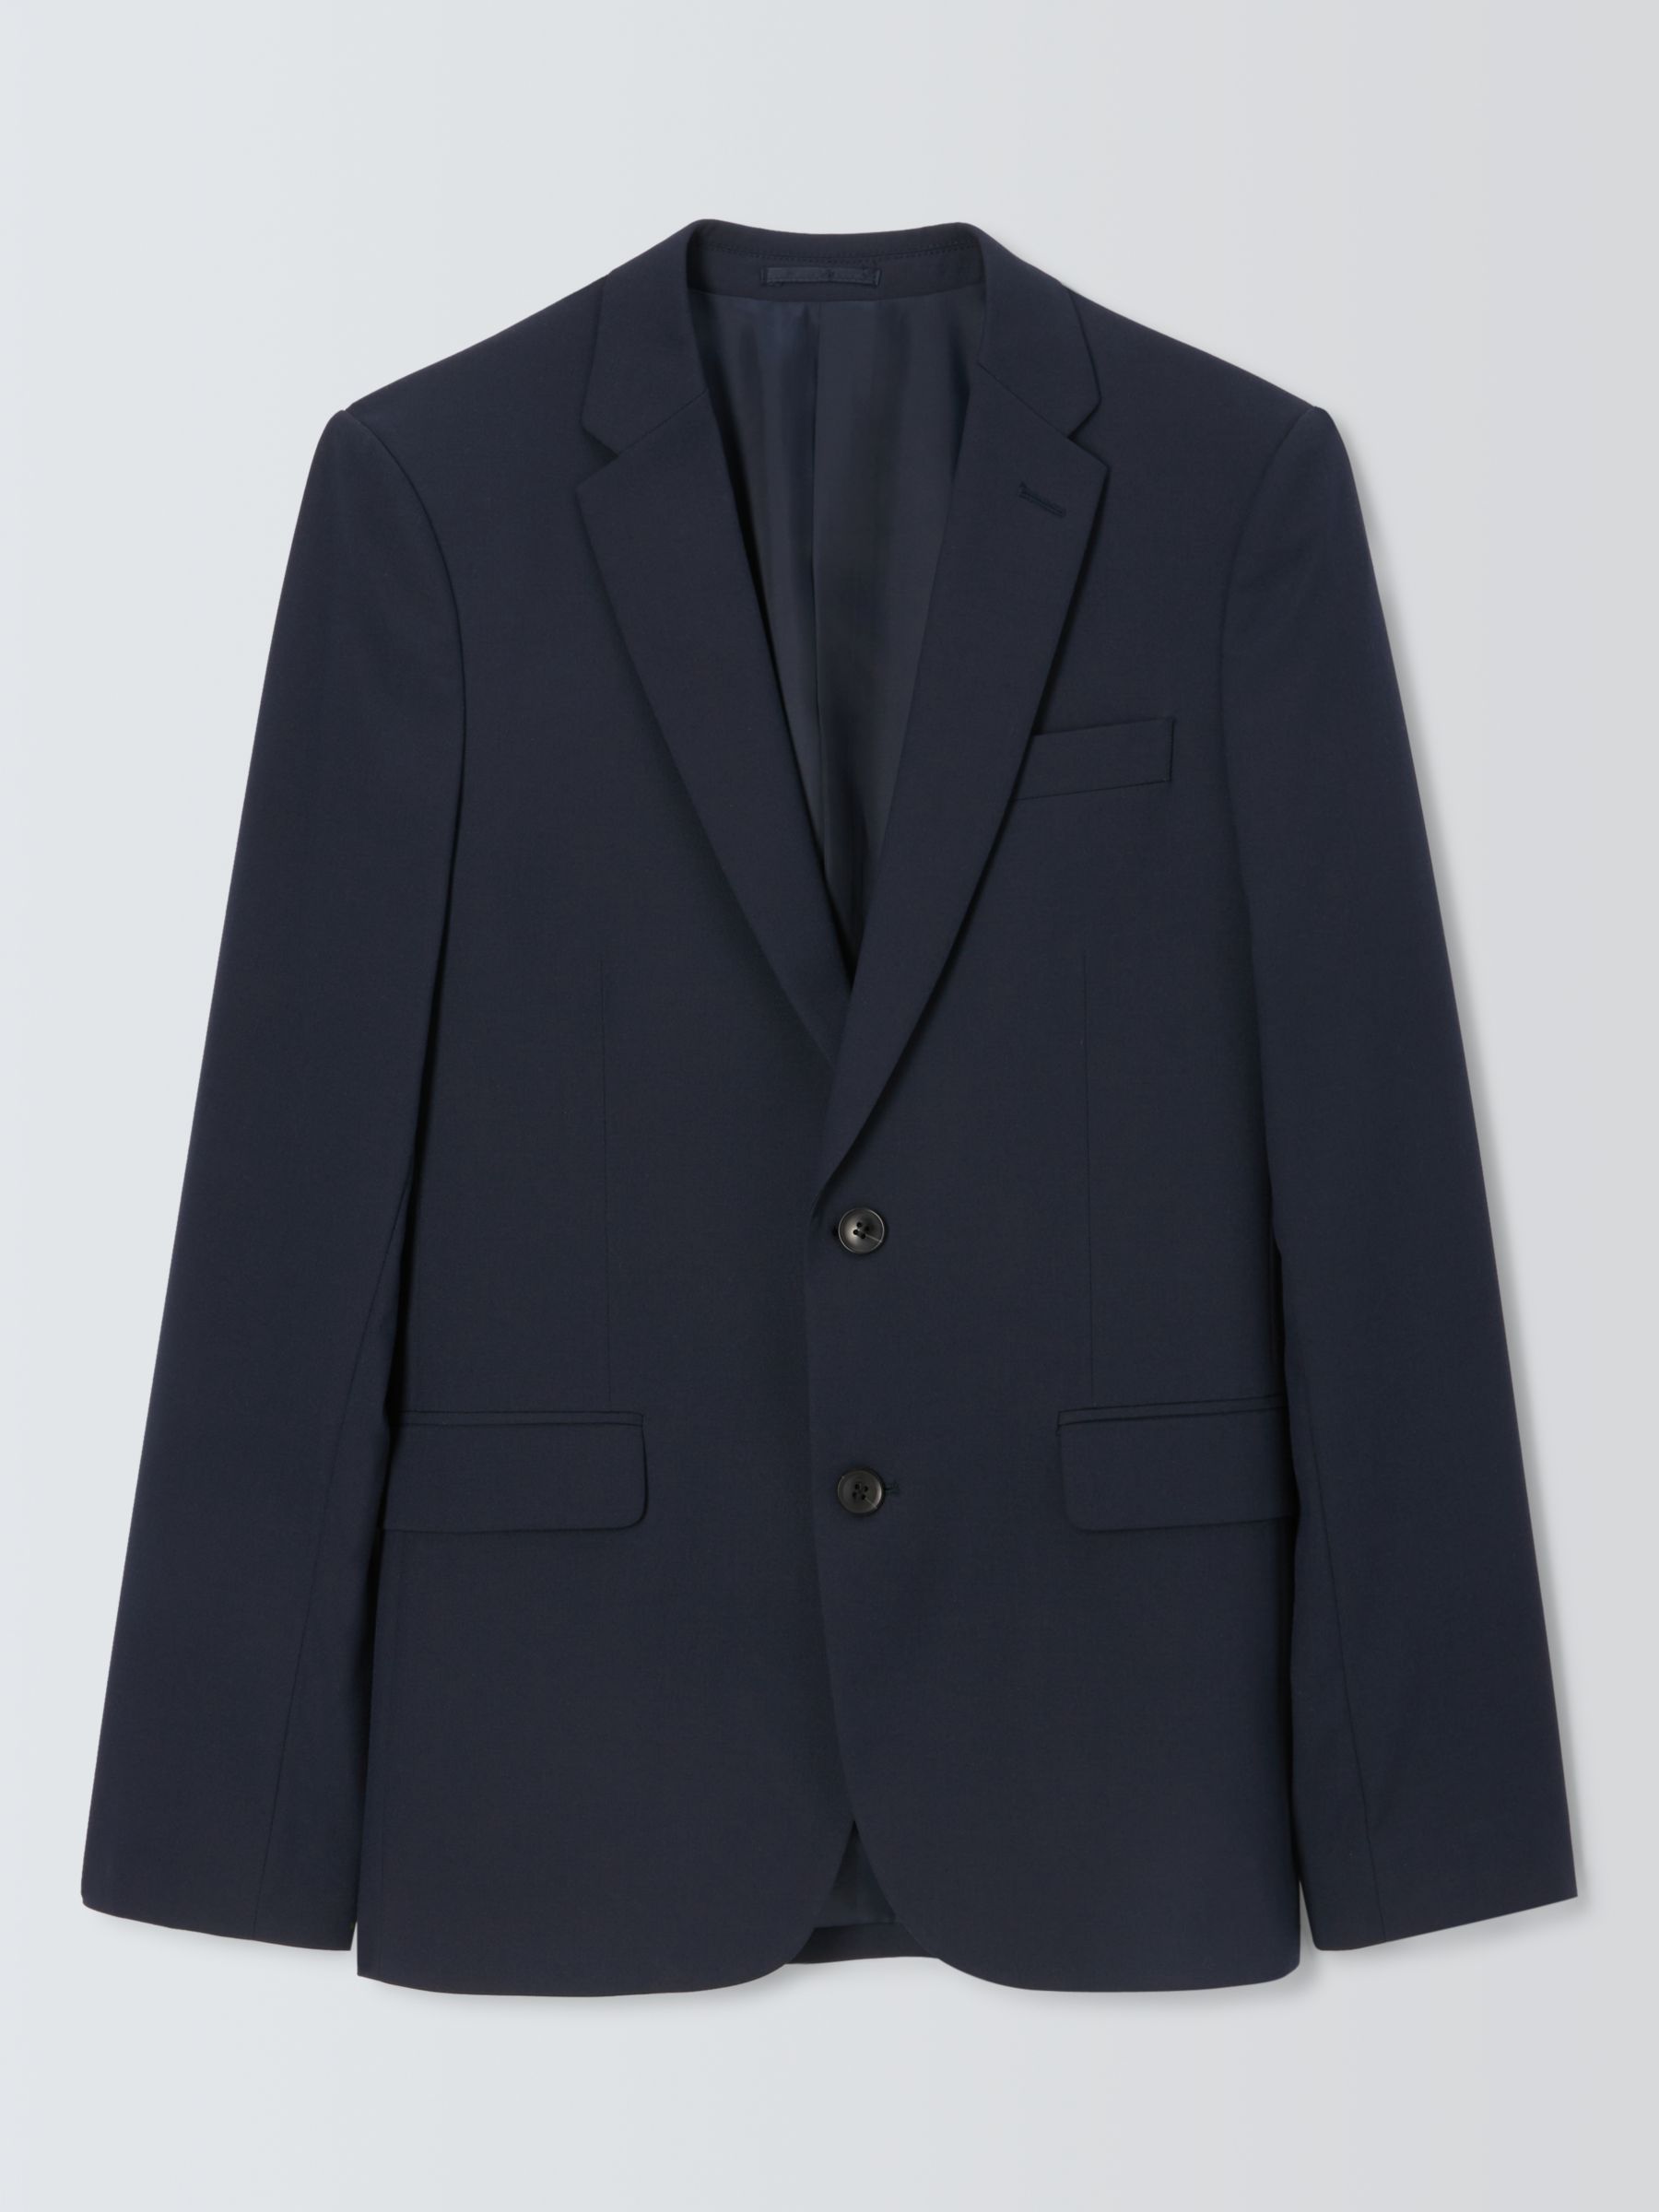 John Lewis Slim Fit Starter Suit Jacket, Navy, 36R